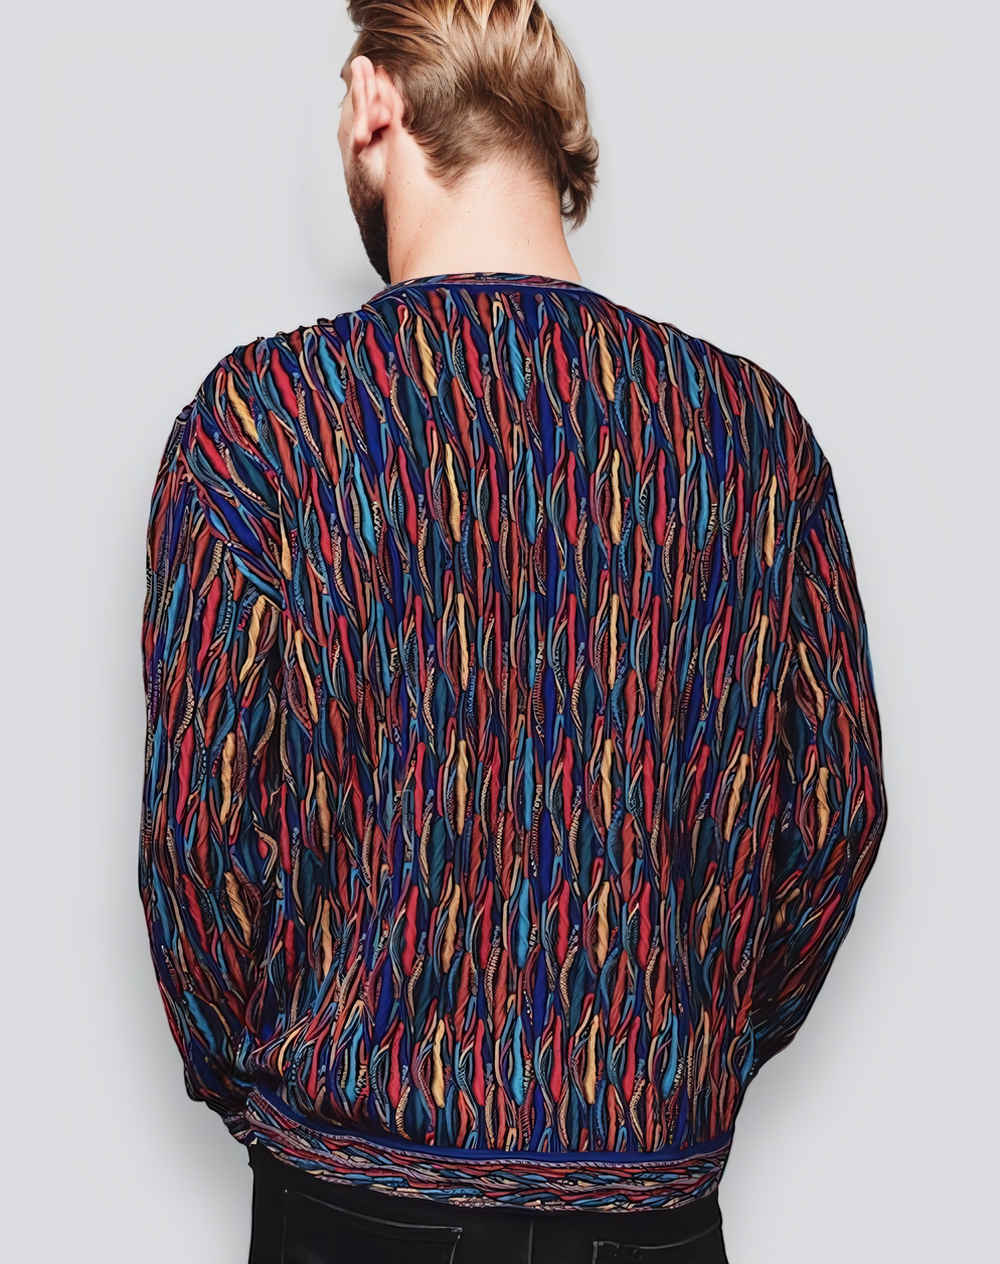 Wave - Bright Sweater Jumper Merino Wool 3D Geccu Knitwear